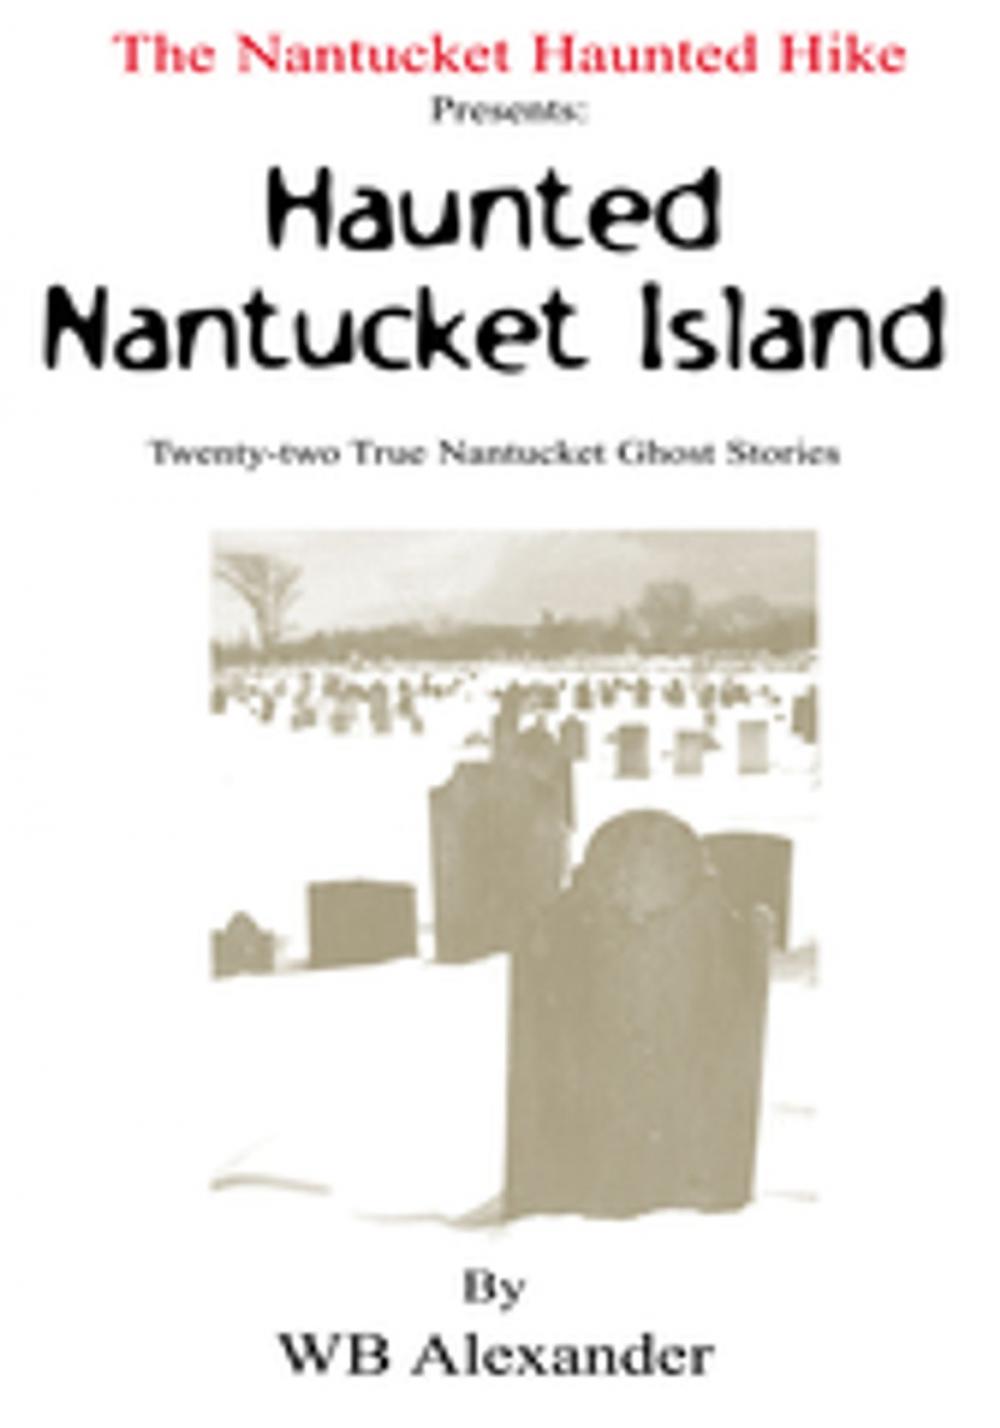 Big bigCover of The Nantucket Haunted Hike Presents: Haunted Nantucket Island Twenty-Two True Nantucket Ghost Stories